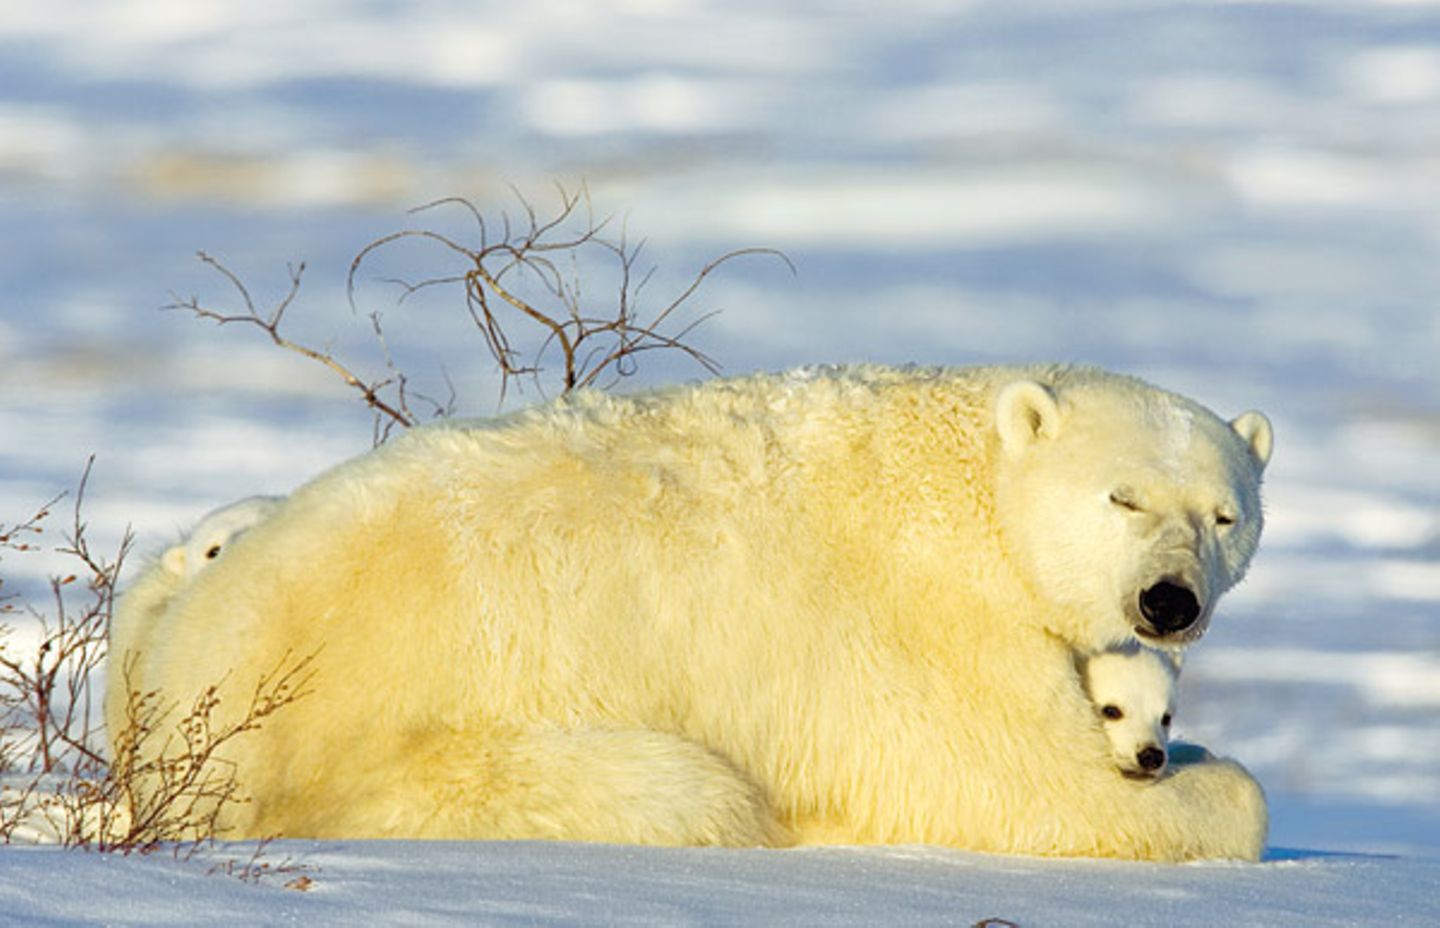 Fotostrecke Eisbären: Familienglück im Schnee